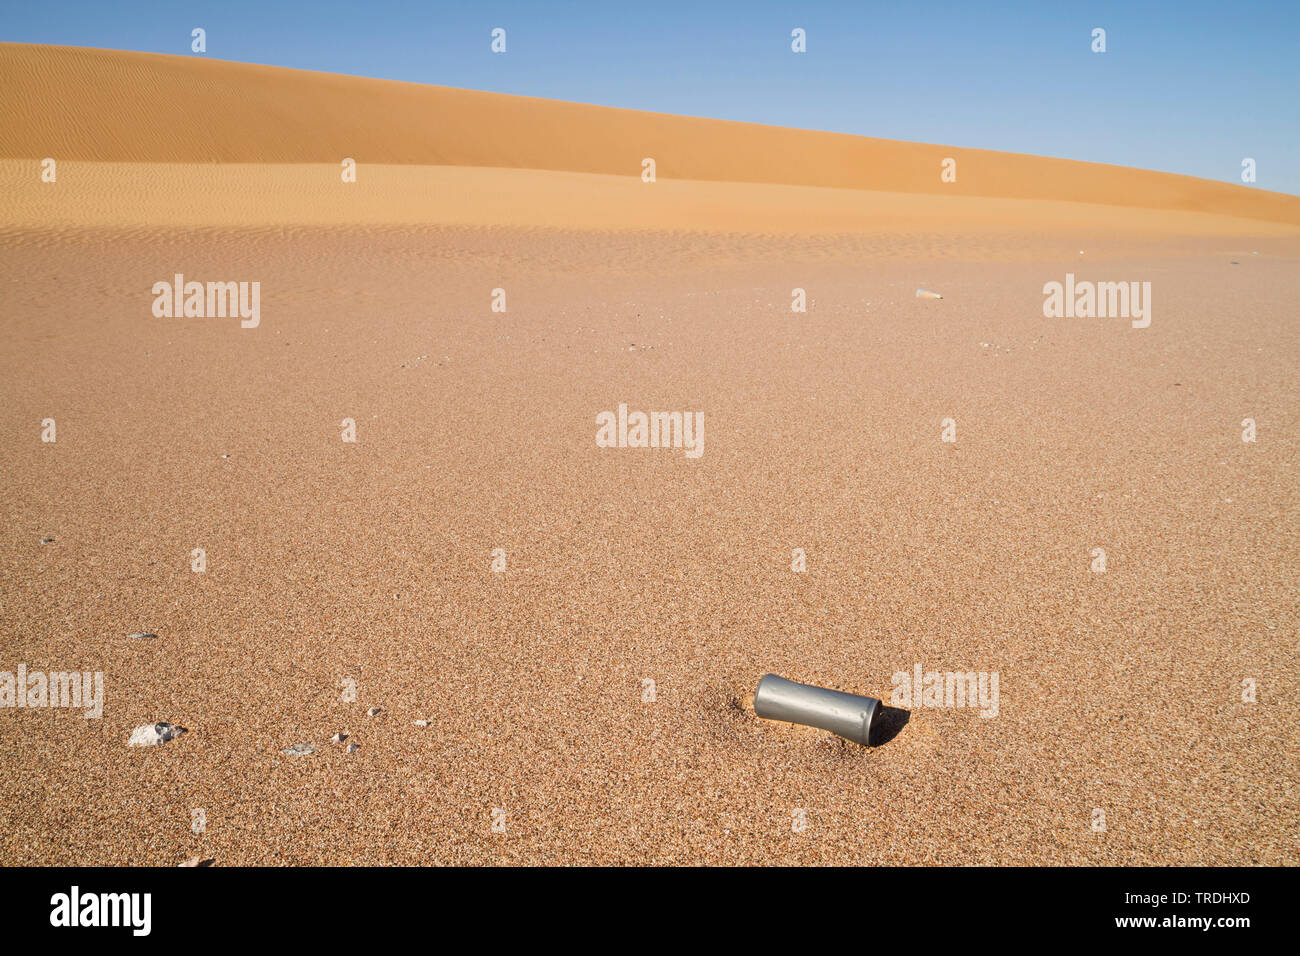 Cartridge-case left behind in central desert of Oman, Oman Stock Photo